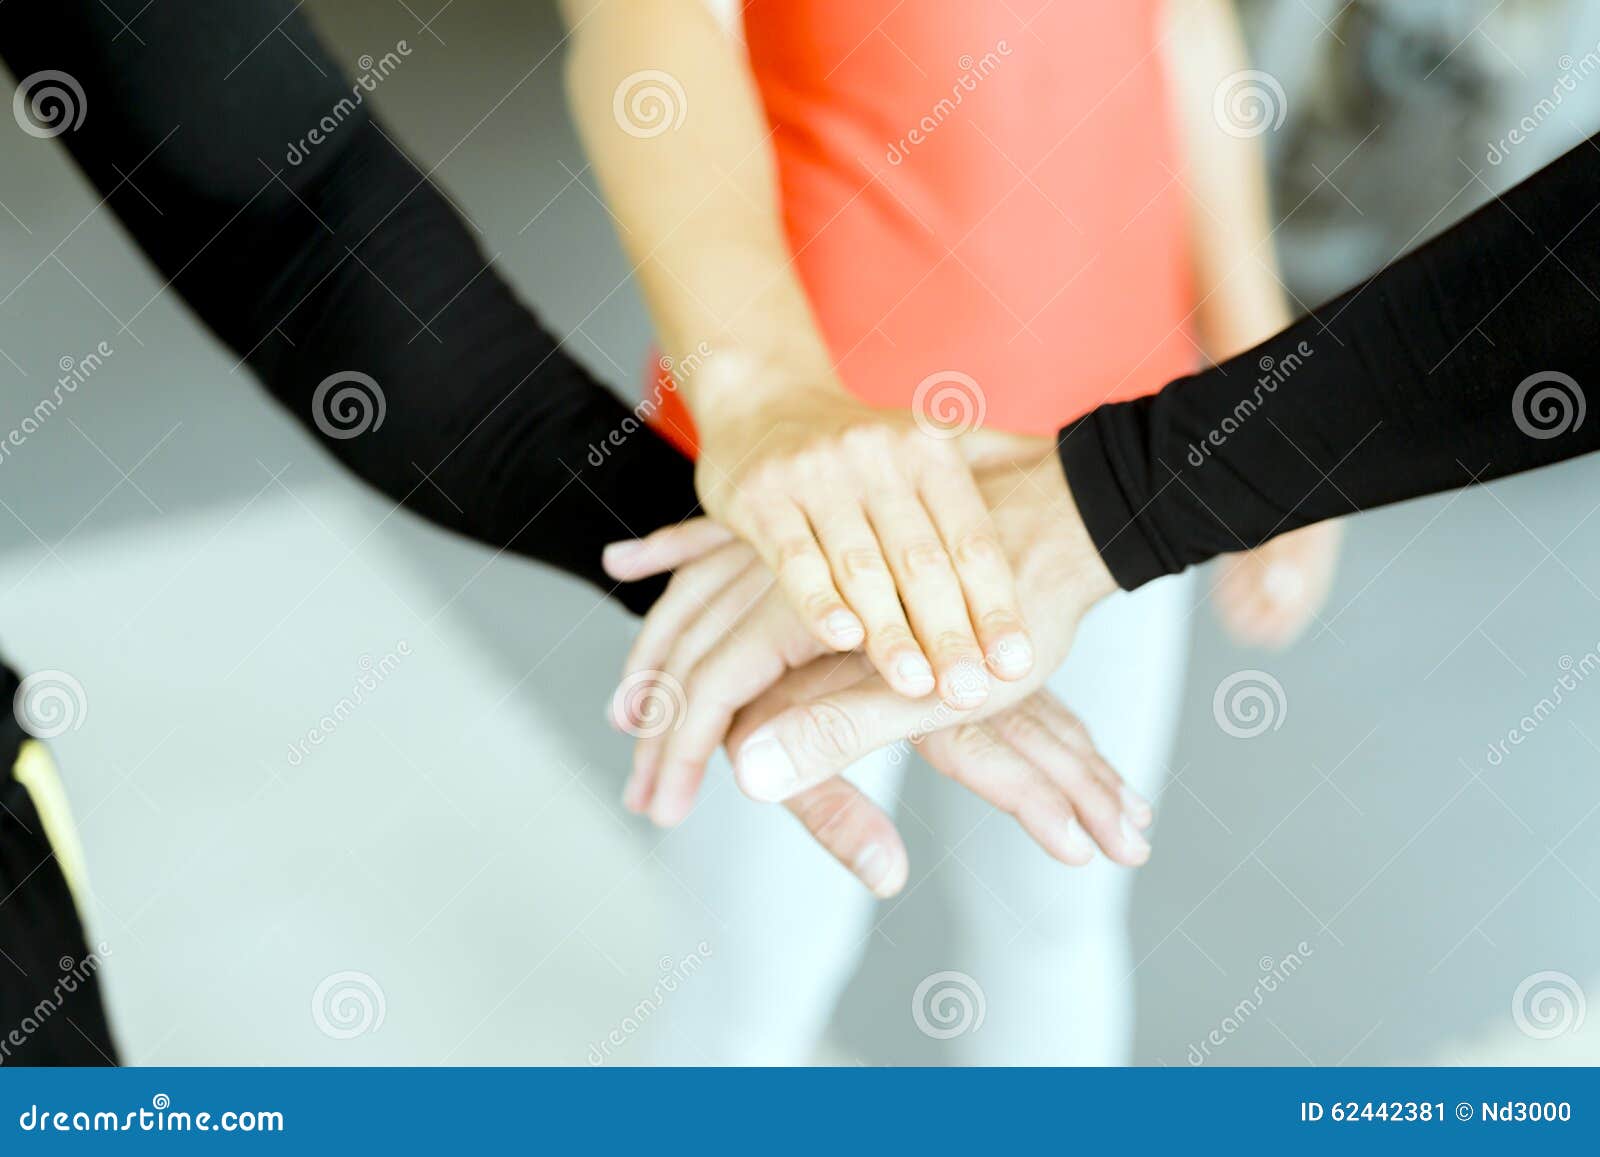 Here e 3. Три руки. Три руки фото. Дружба между спортсменами. Приветствие на троих руками.